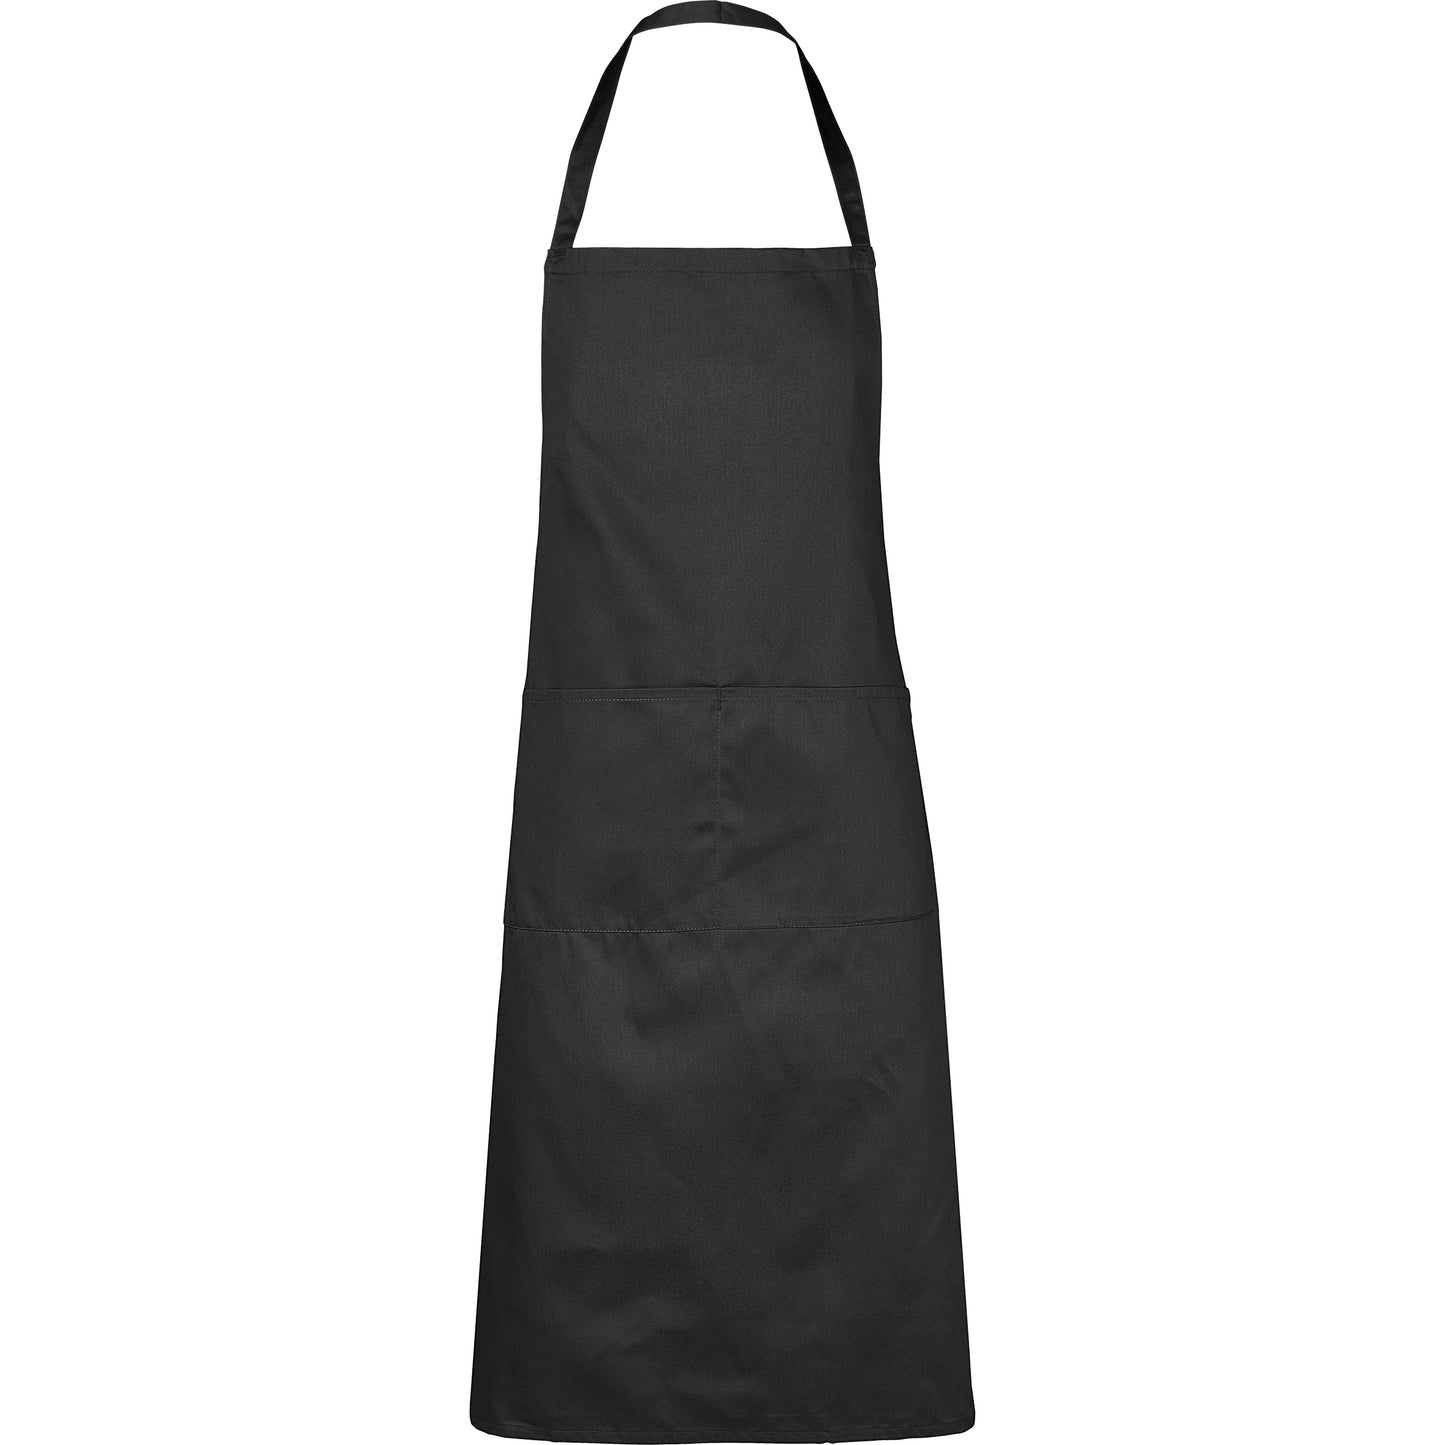 Personalised apron - black.  Your design